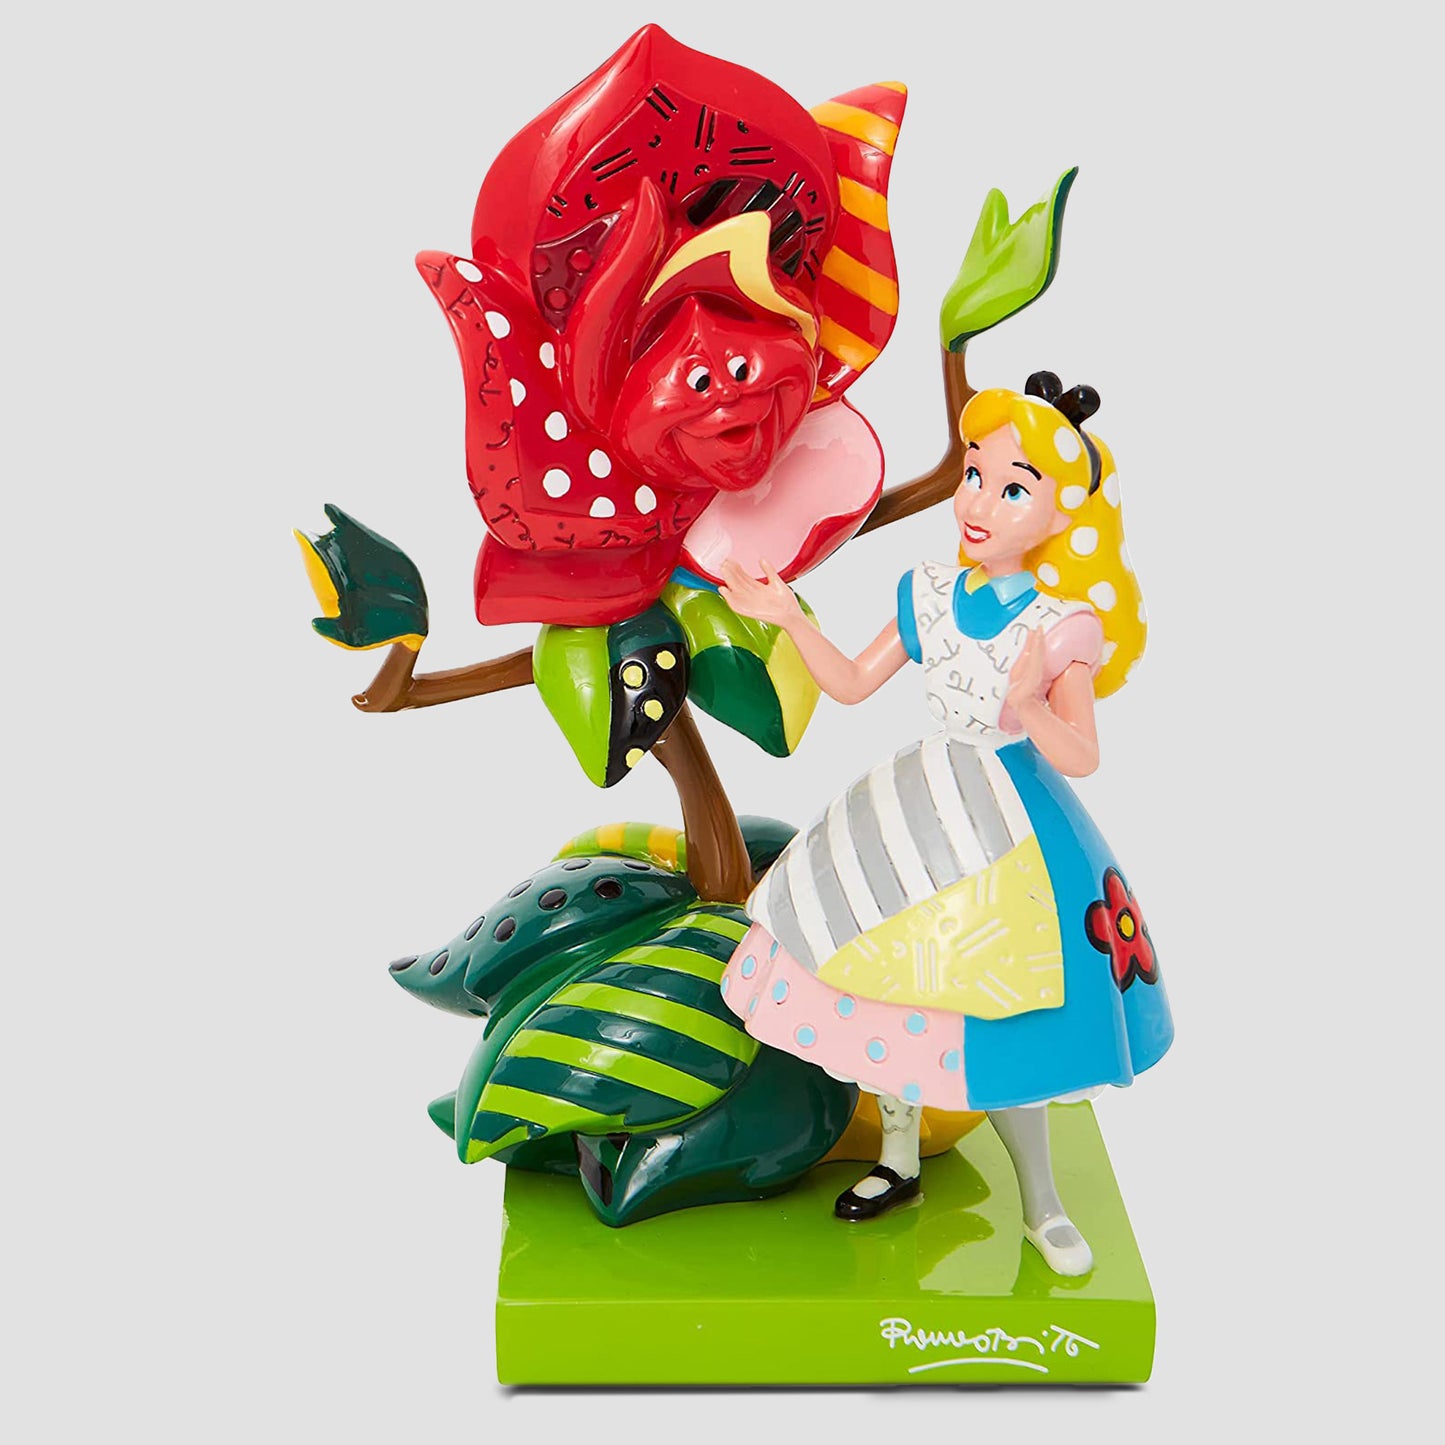 Alice with Flower (Alice in Wonderland) Disney by Britto Pop Art Resin Statue